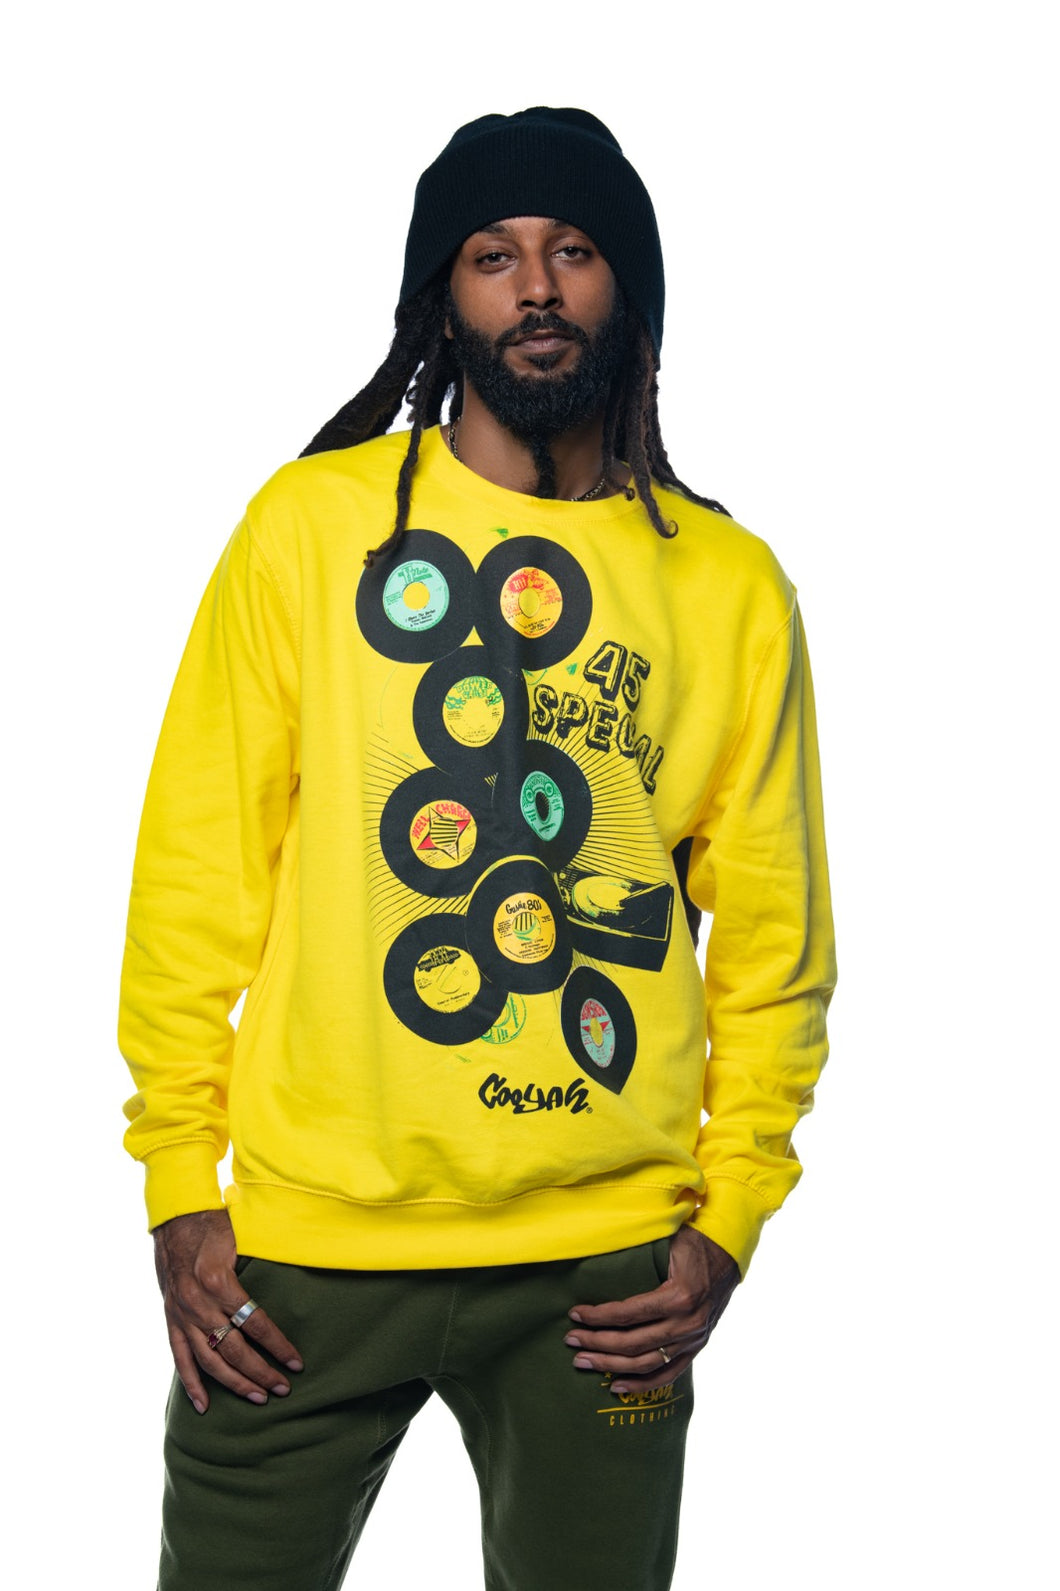 Men’s Sweatshirt with 45 RPM Graphic